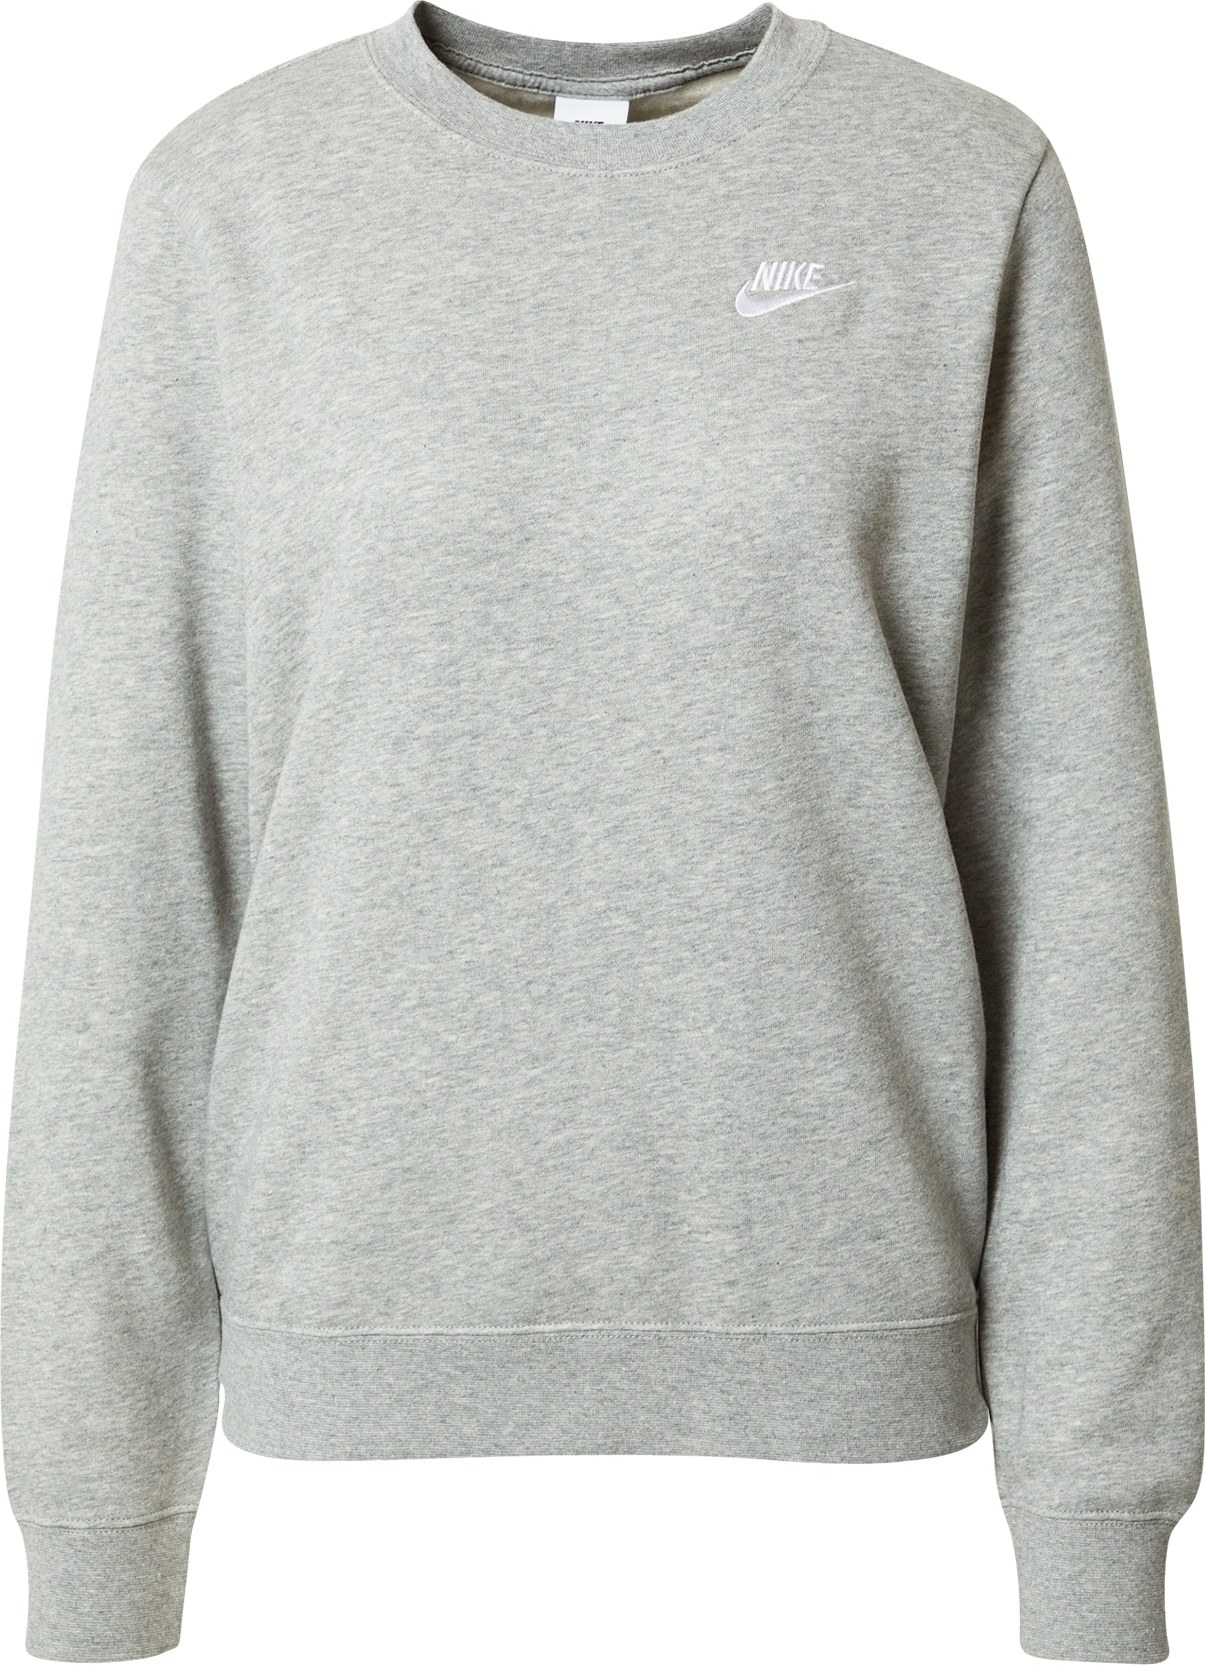 Mikina 'Club Fleece' Nike Sportswear šedý melír / bílá